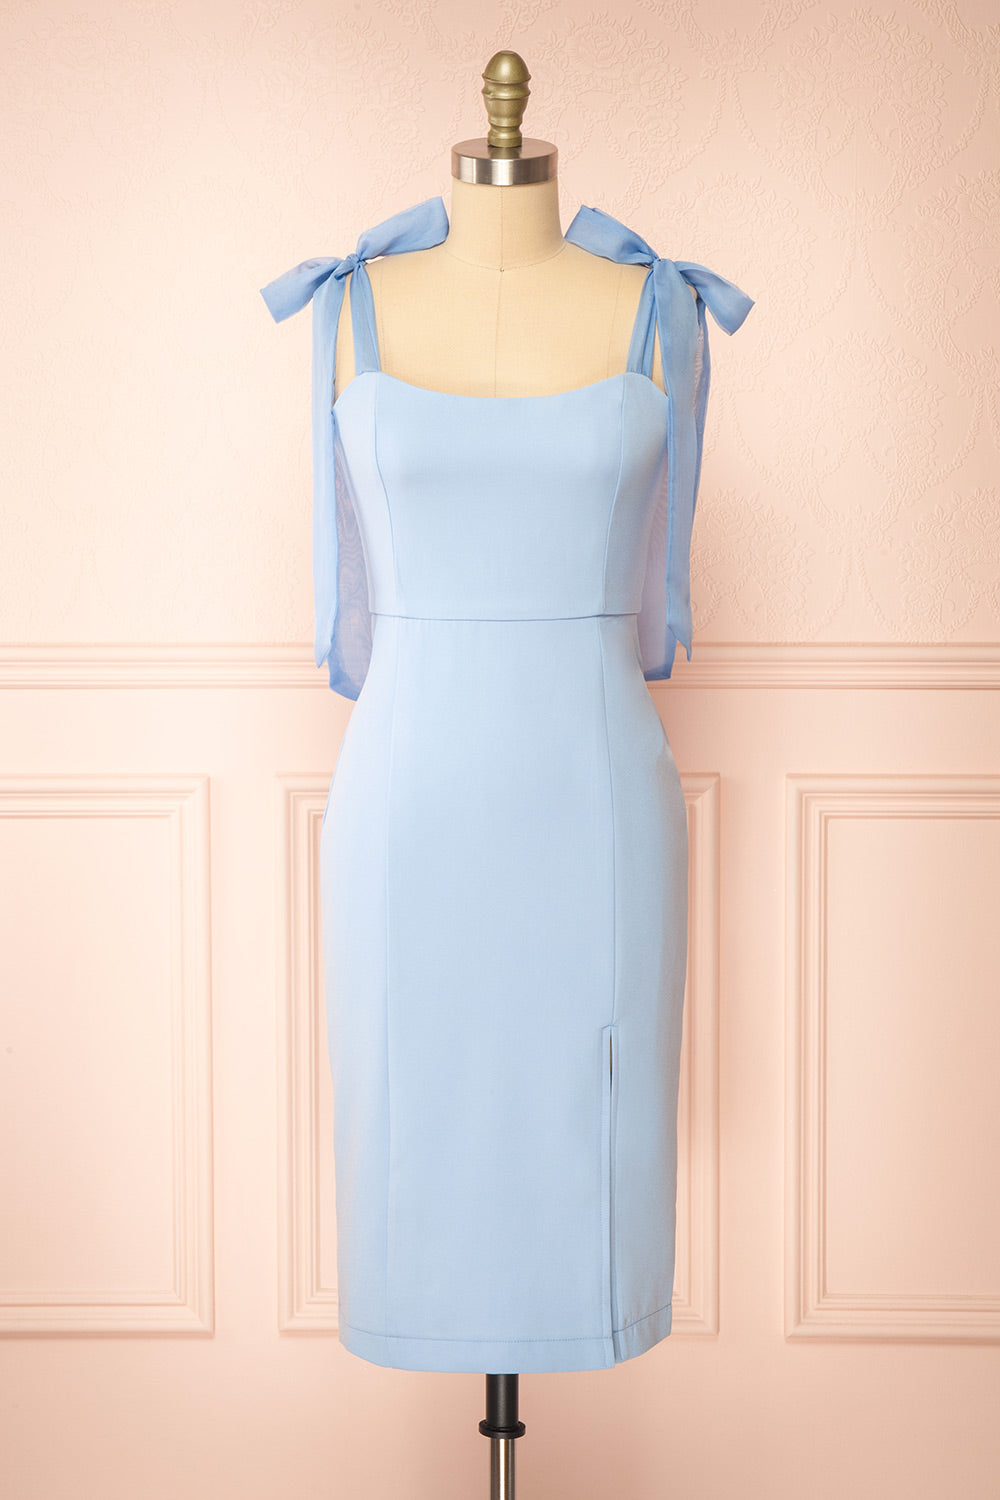 Claudy Short Blue Dress w/ Bow Straps | Boutique 1861 front view